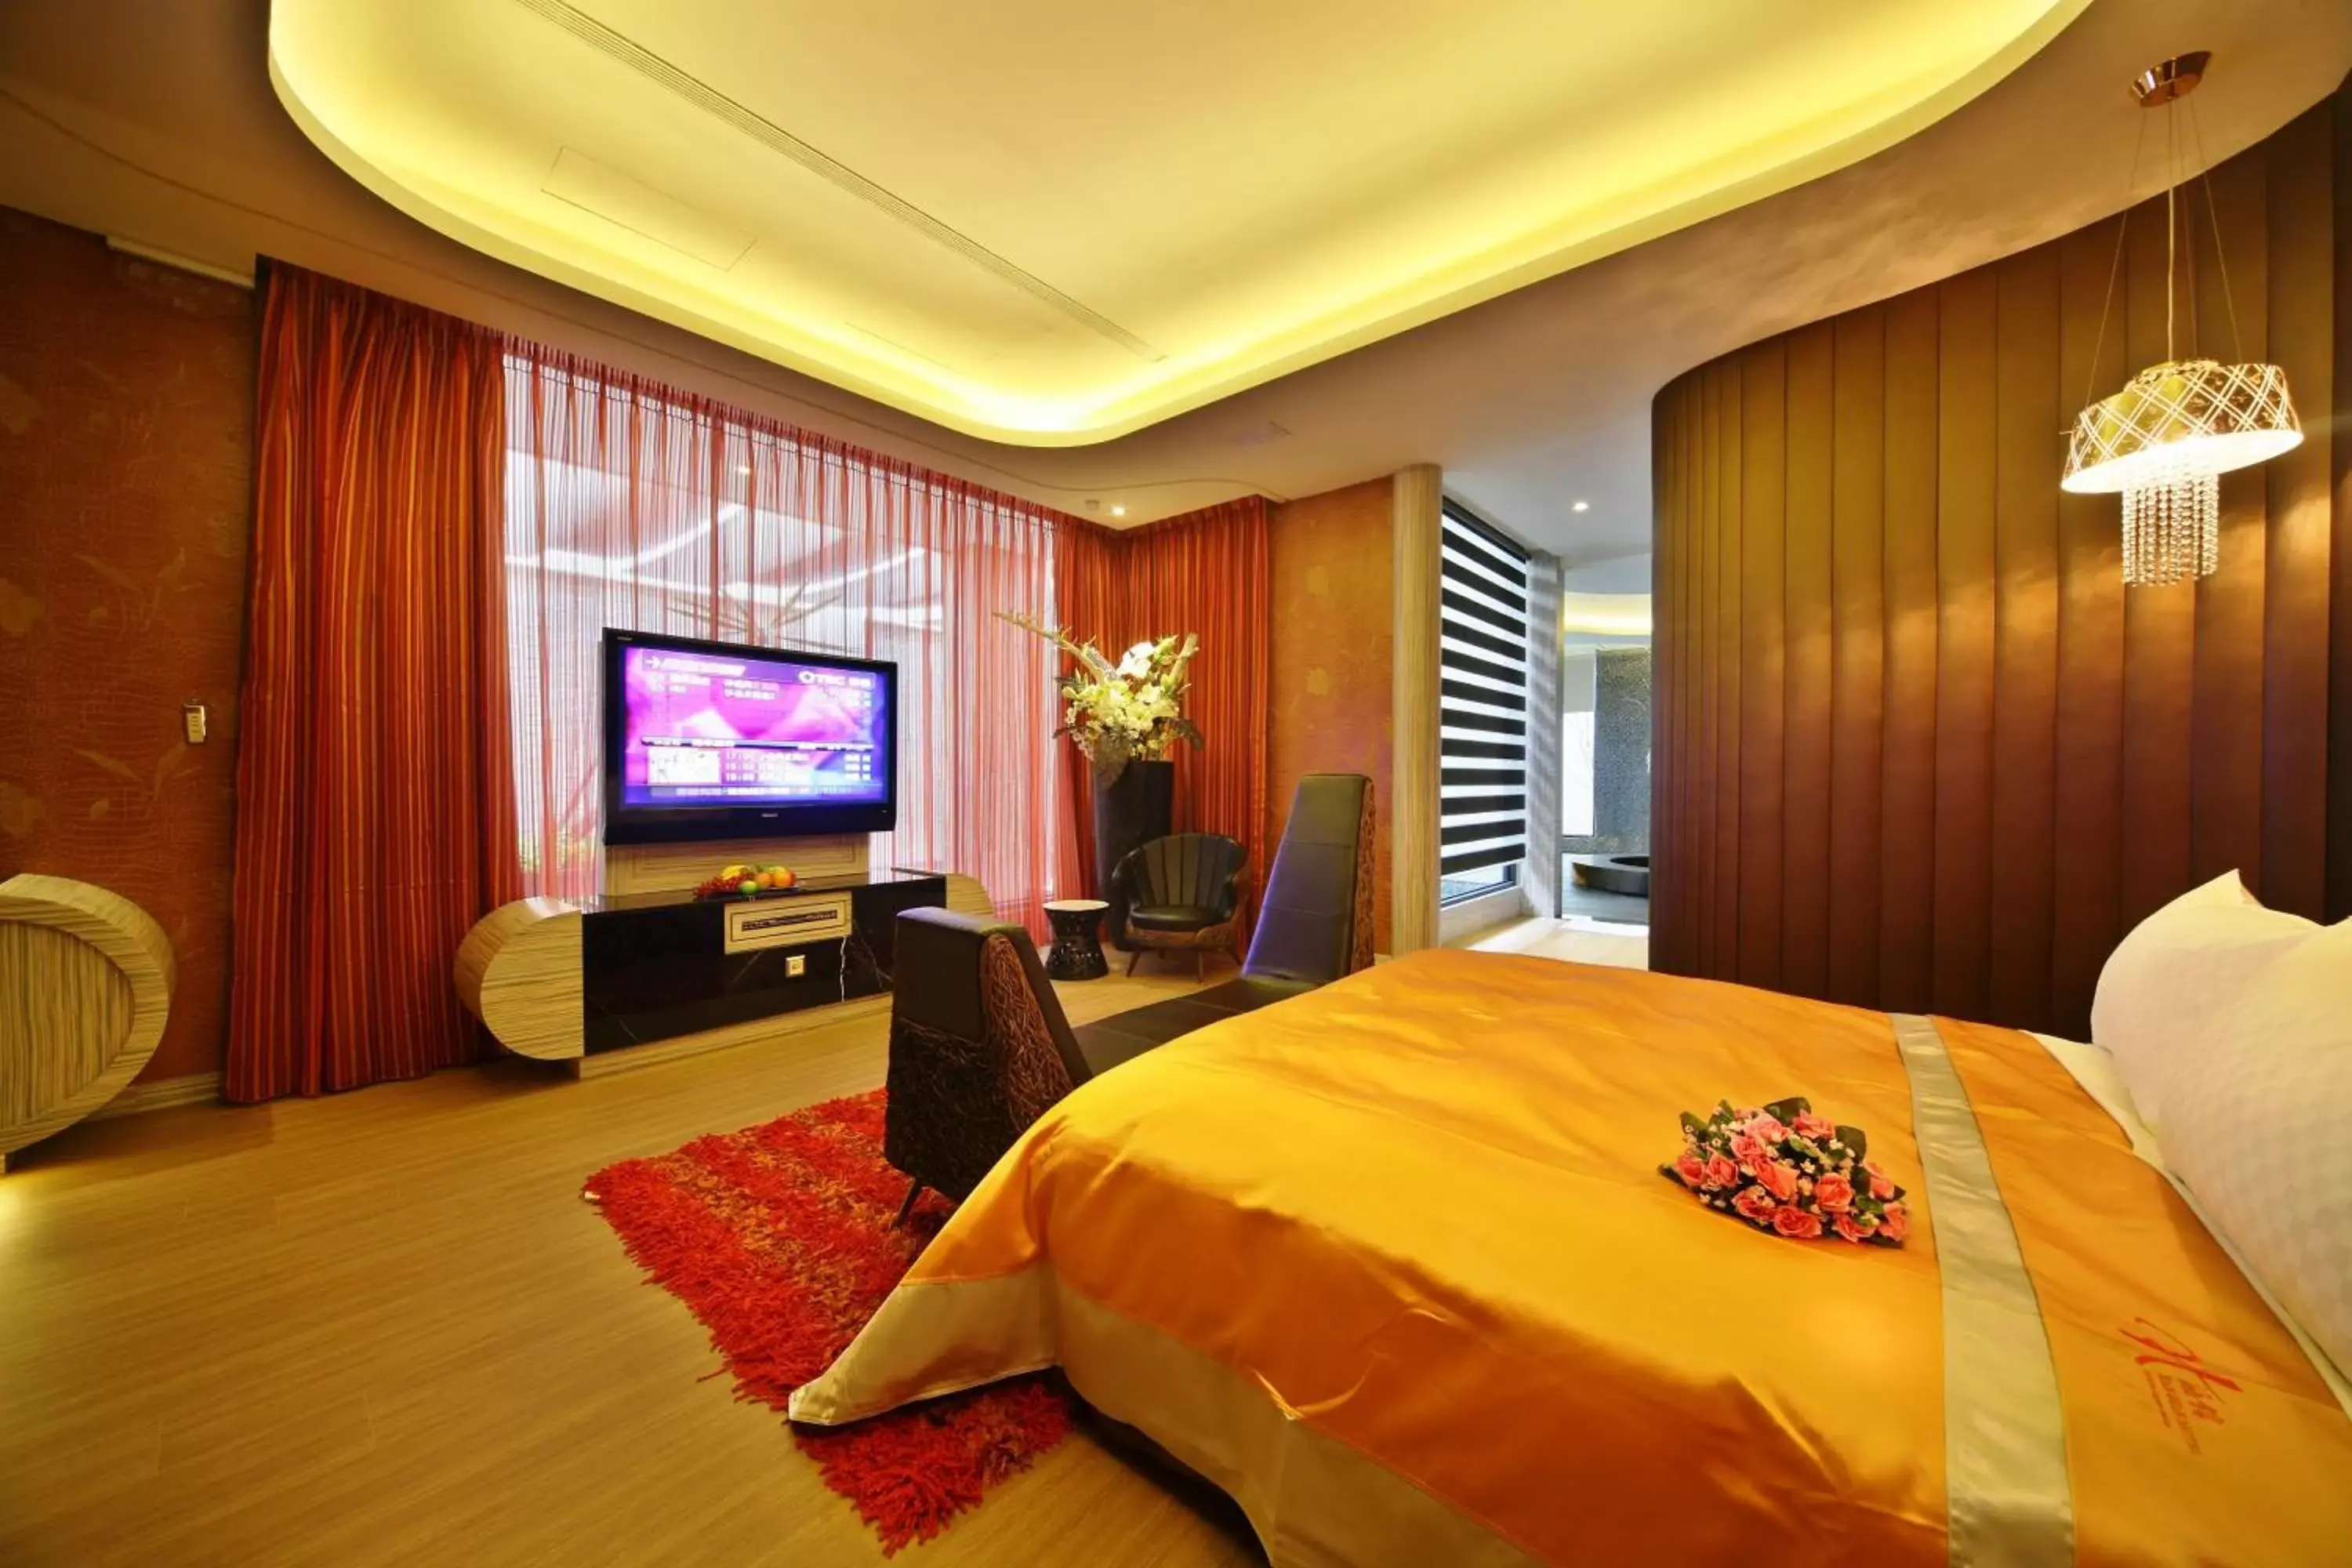 bunk bed, Room Photo in Han Guan Motel